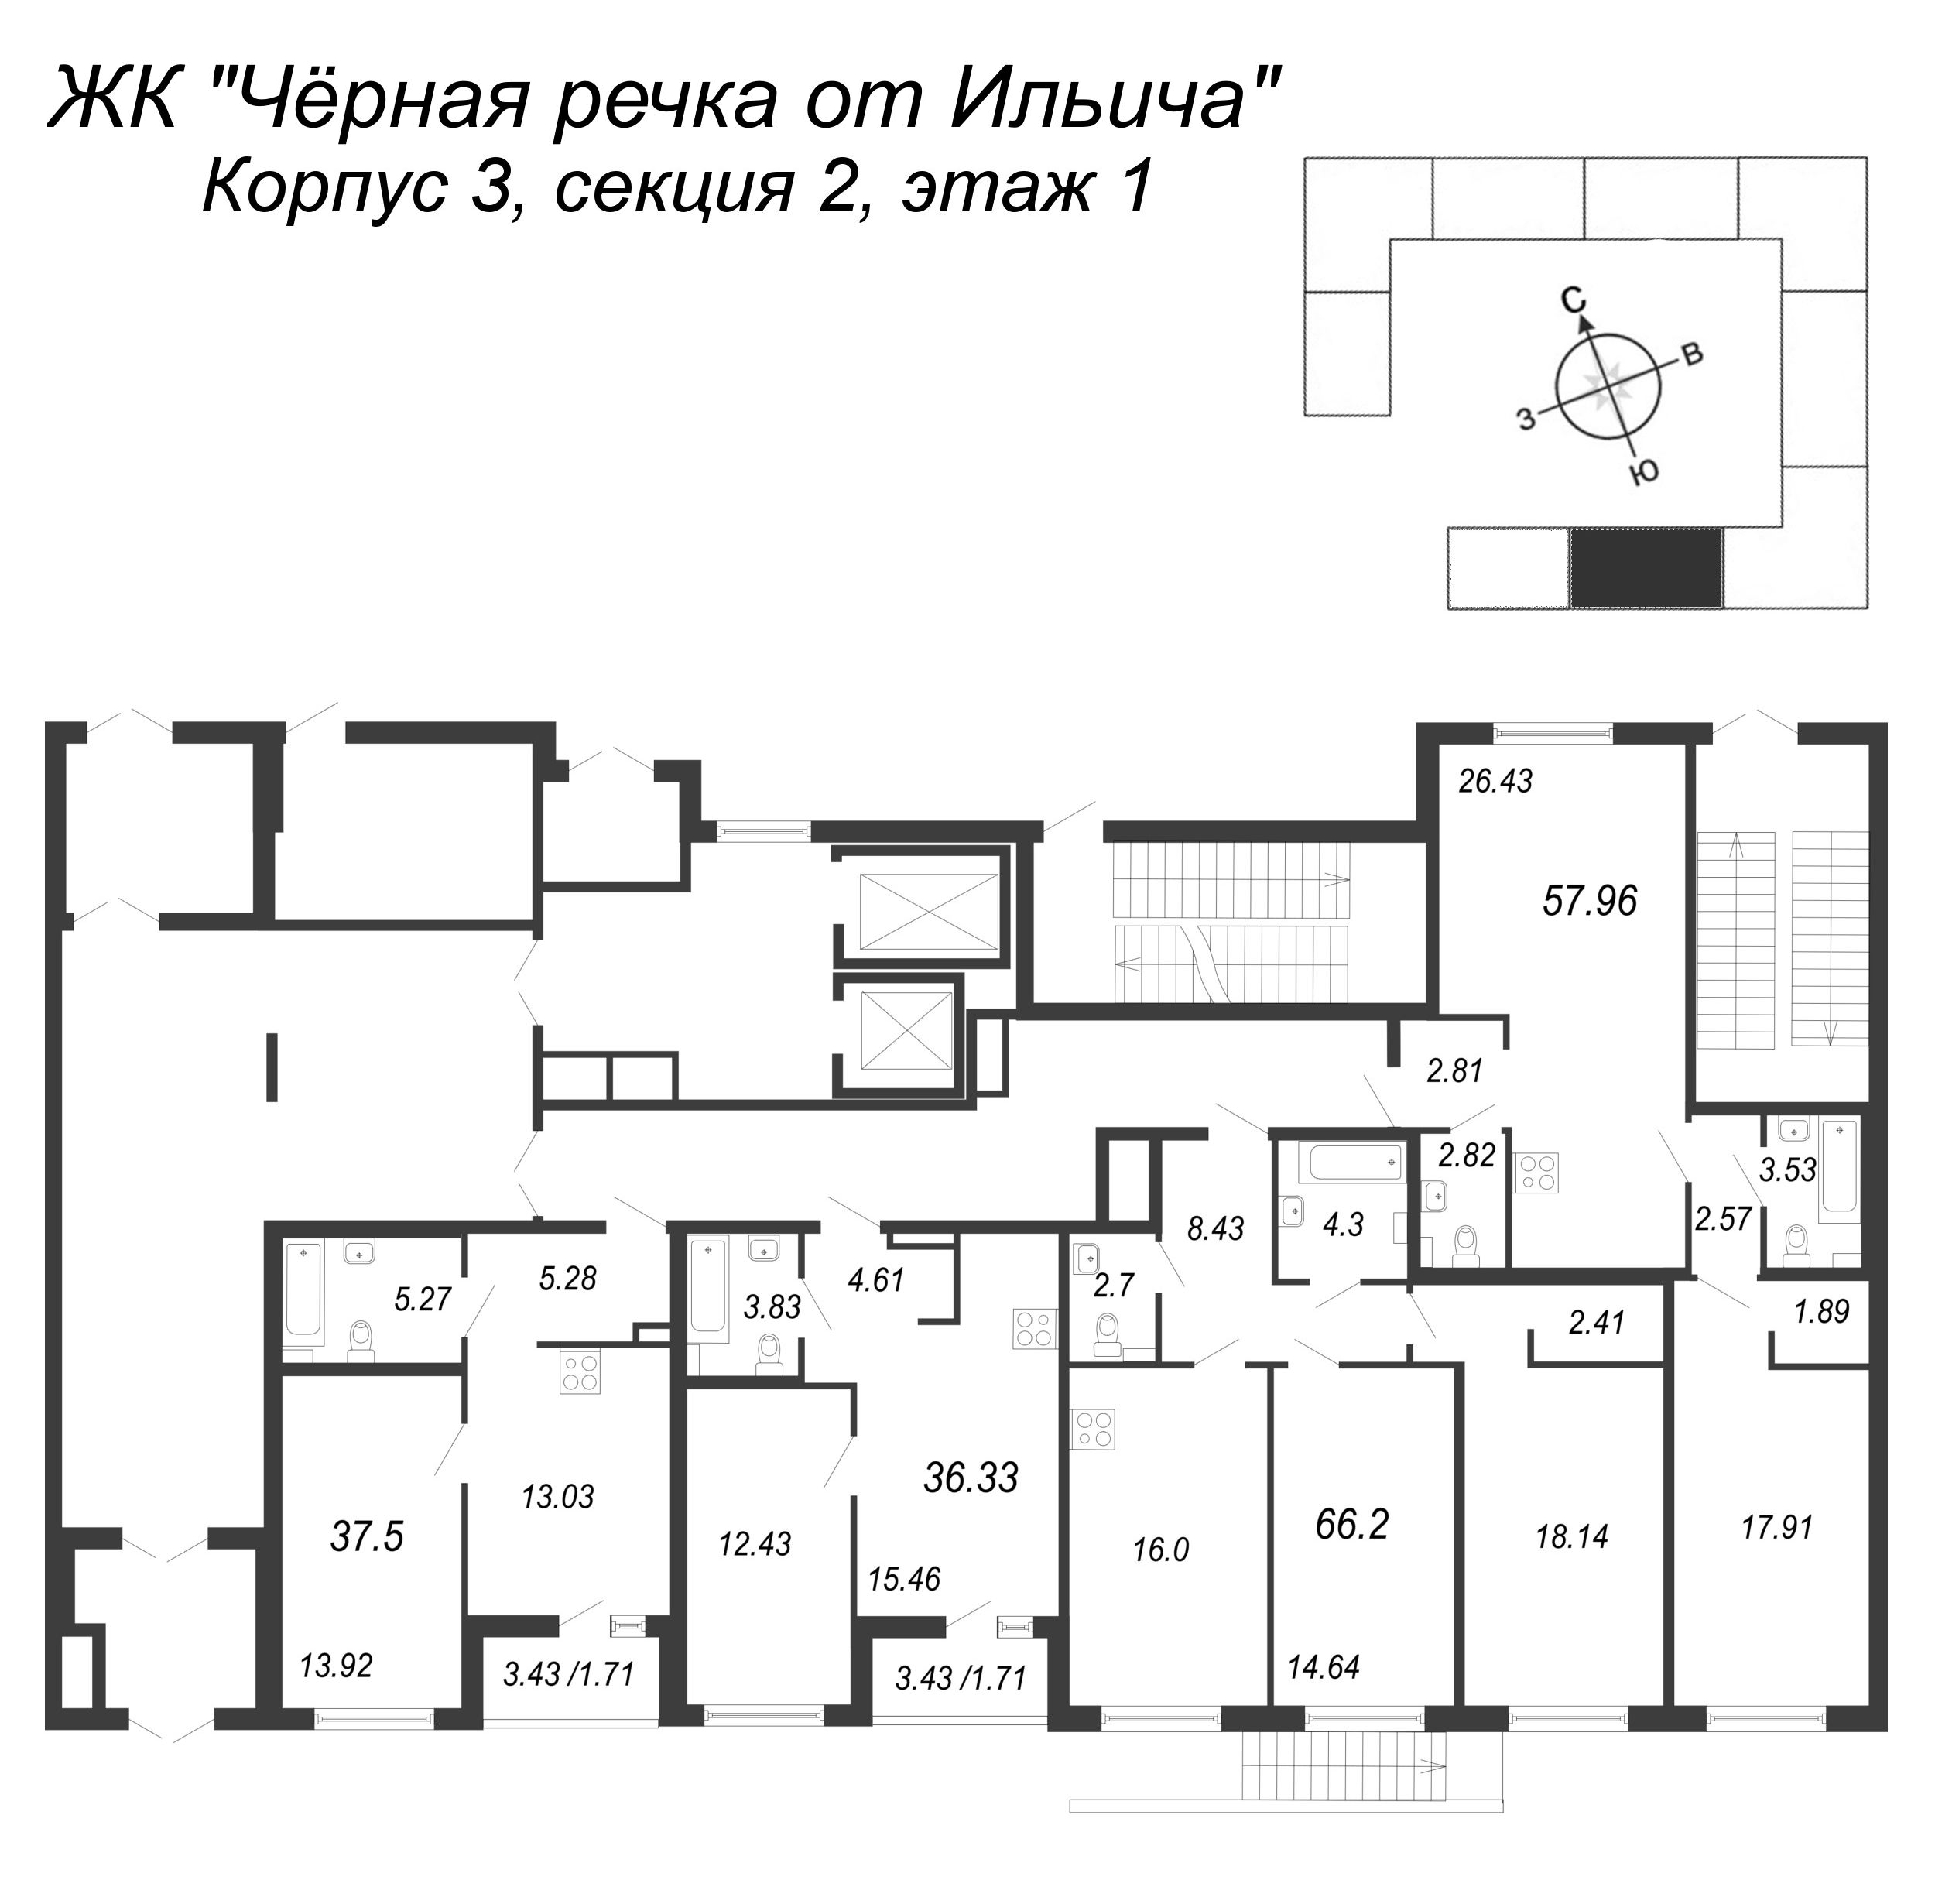 3-комнатная (Евро) квартира, 66.62 м² в ЖК "Чёрная речка от Ильича" - планировка этажа